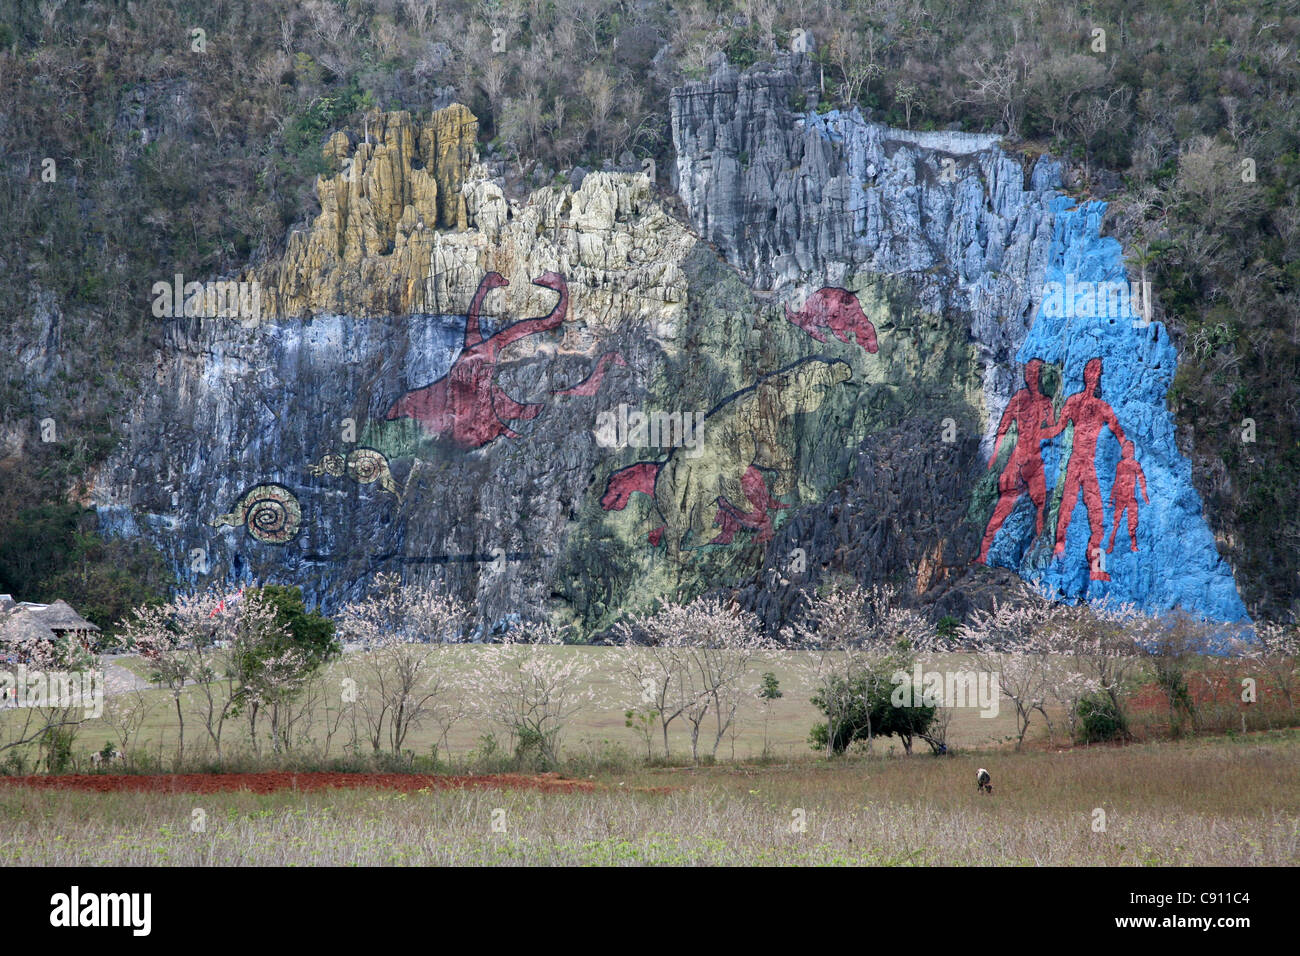 Mural de la Prehistoria. Cliff painting of the theory of evolution by Leovigildo Gonzalez Morillo in the Vinales Valley, Cuba. Stock Photo